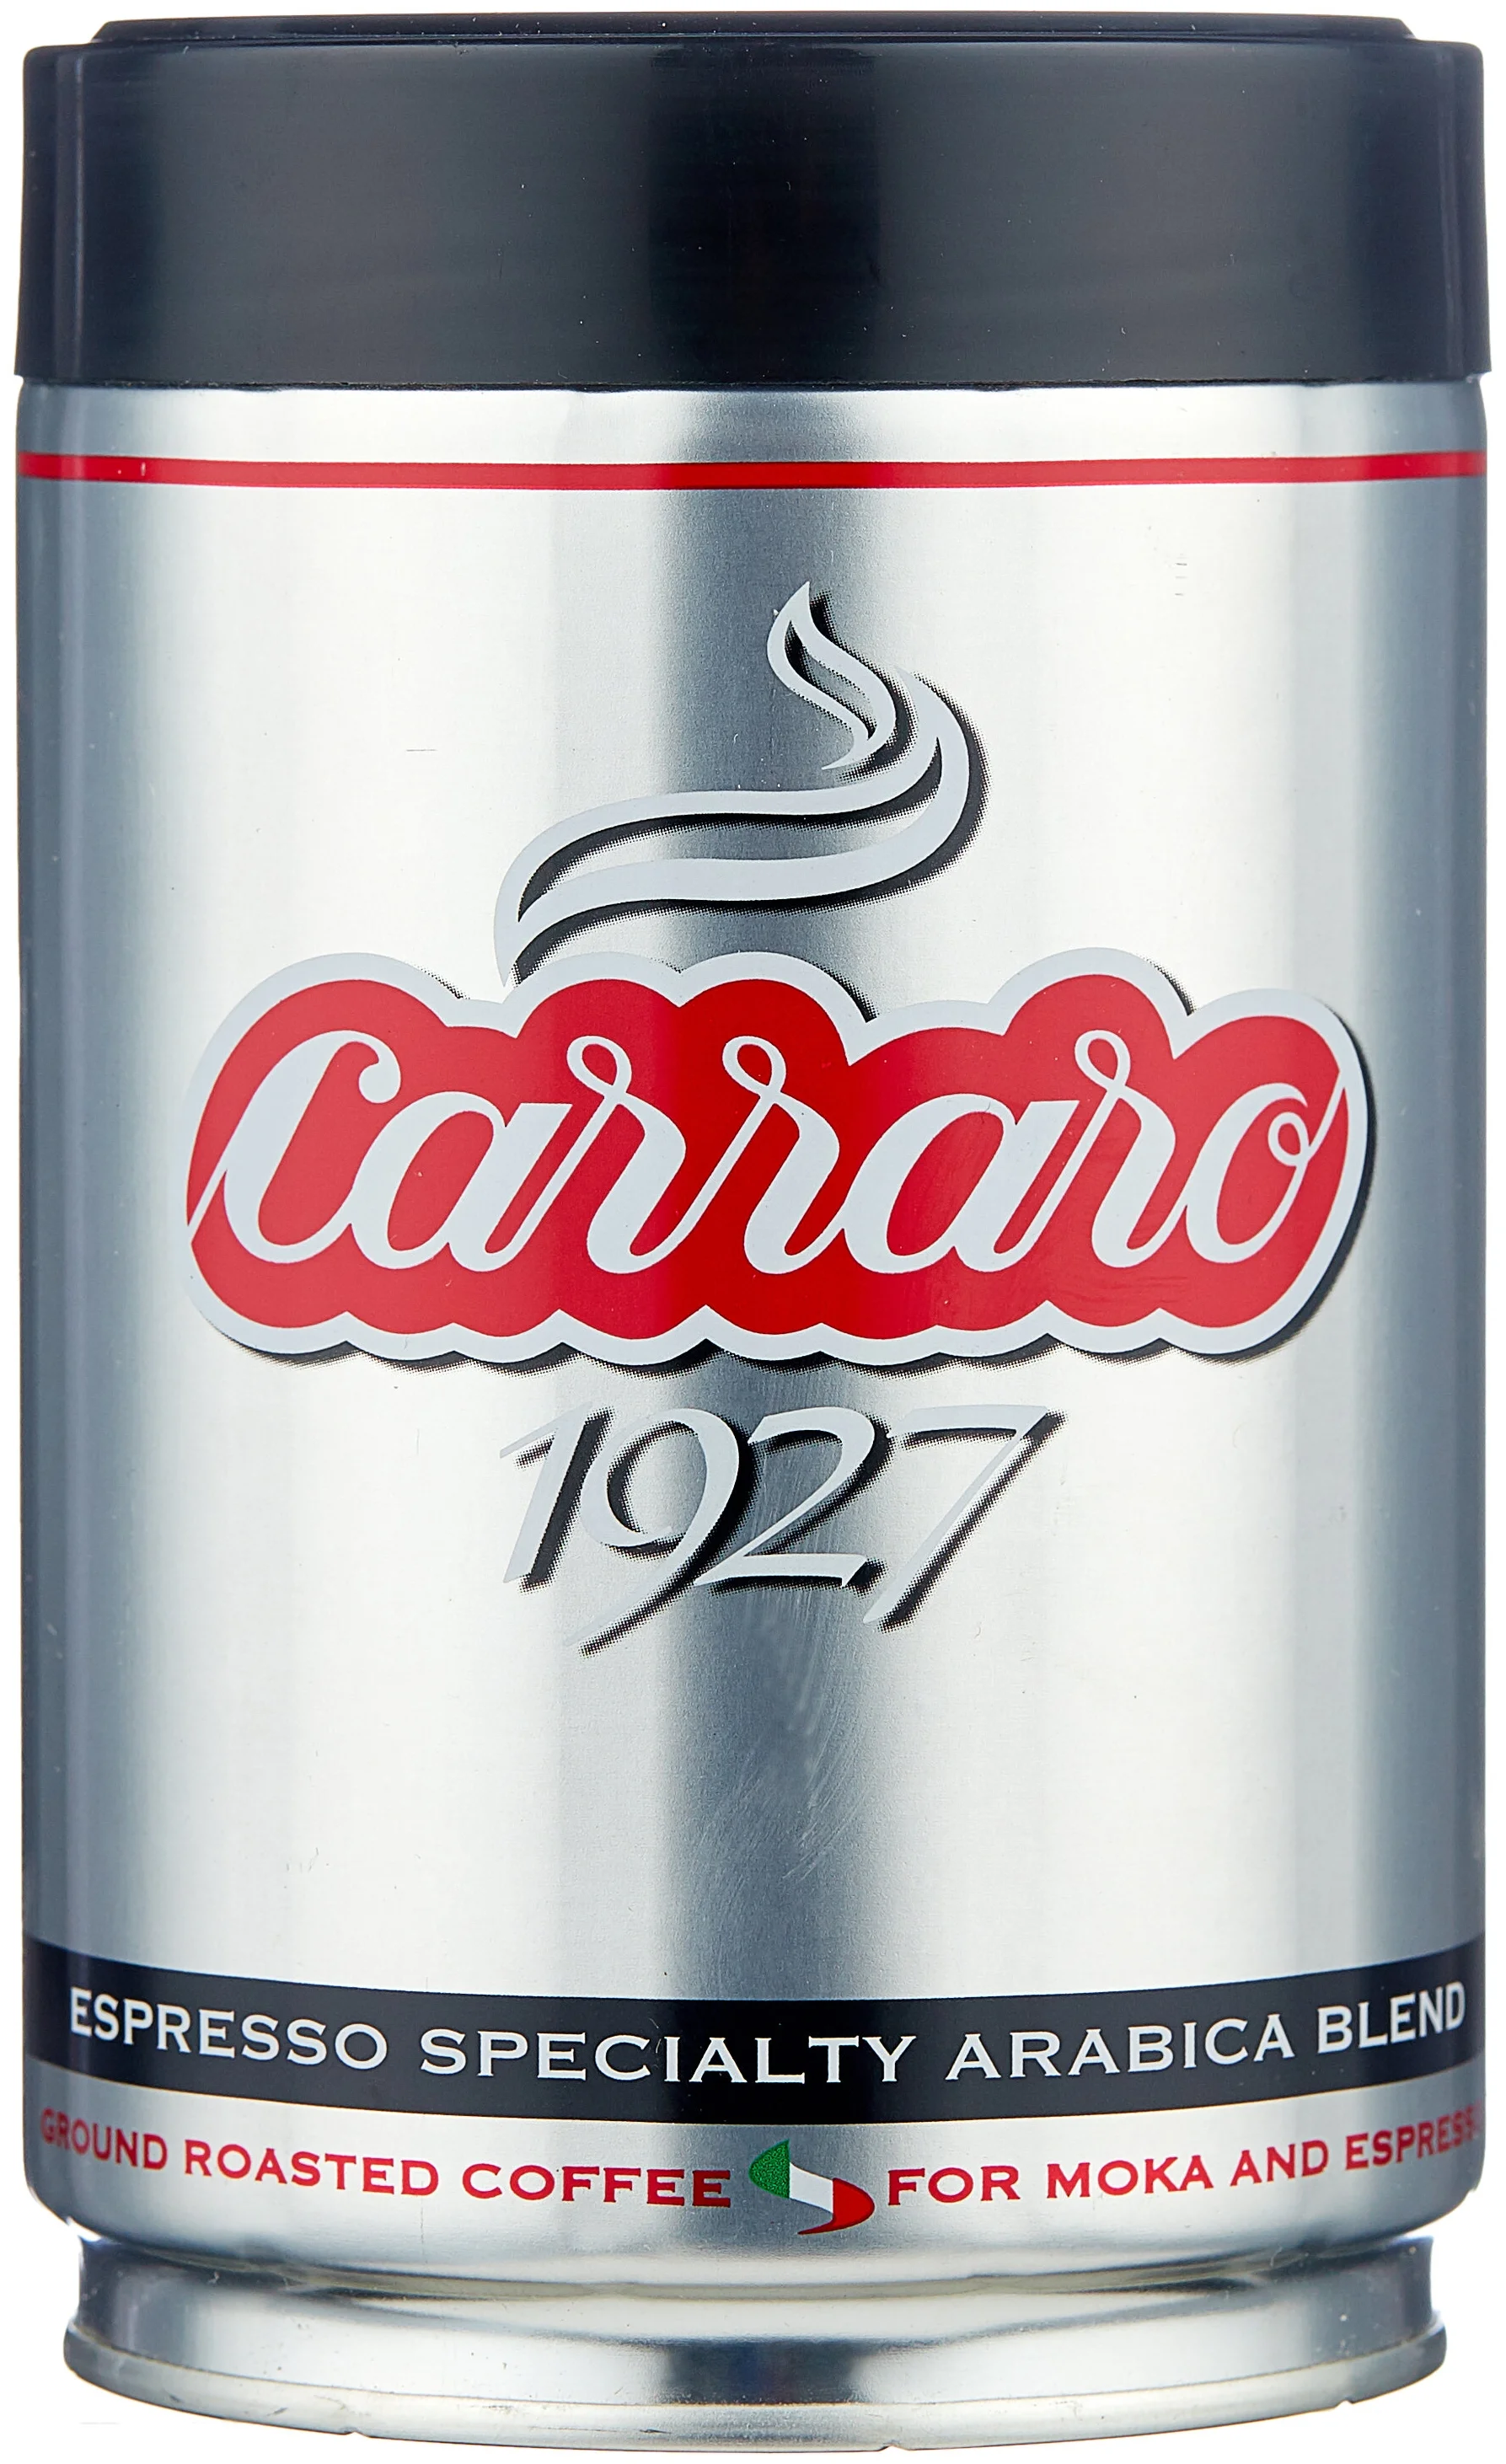 Carraro 1927 - вид зерен: арабика